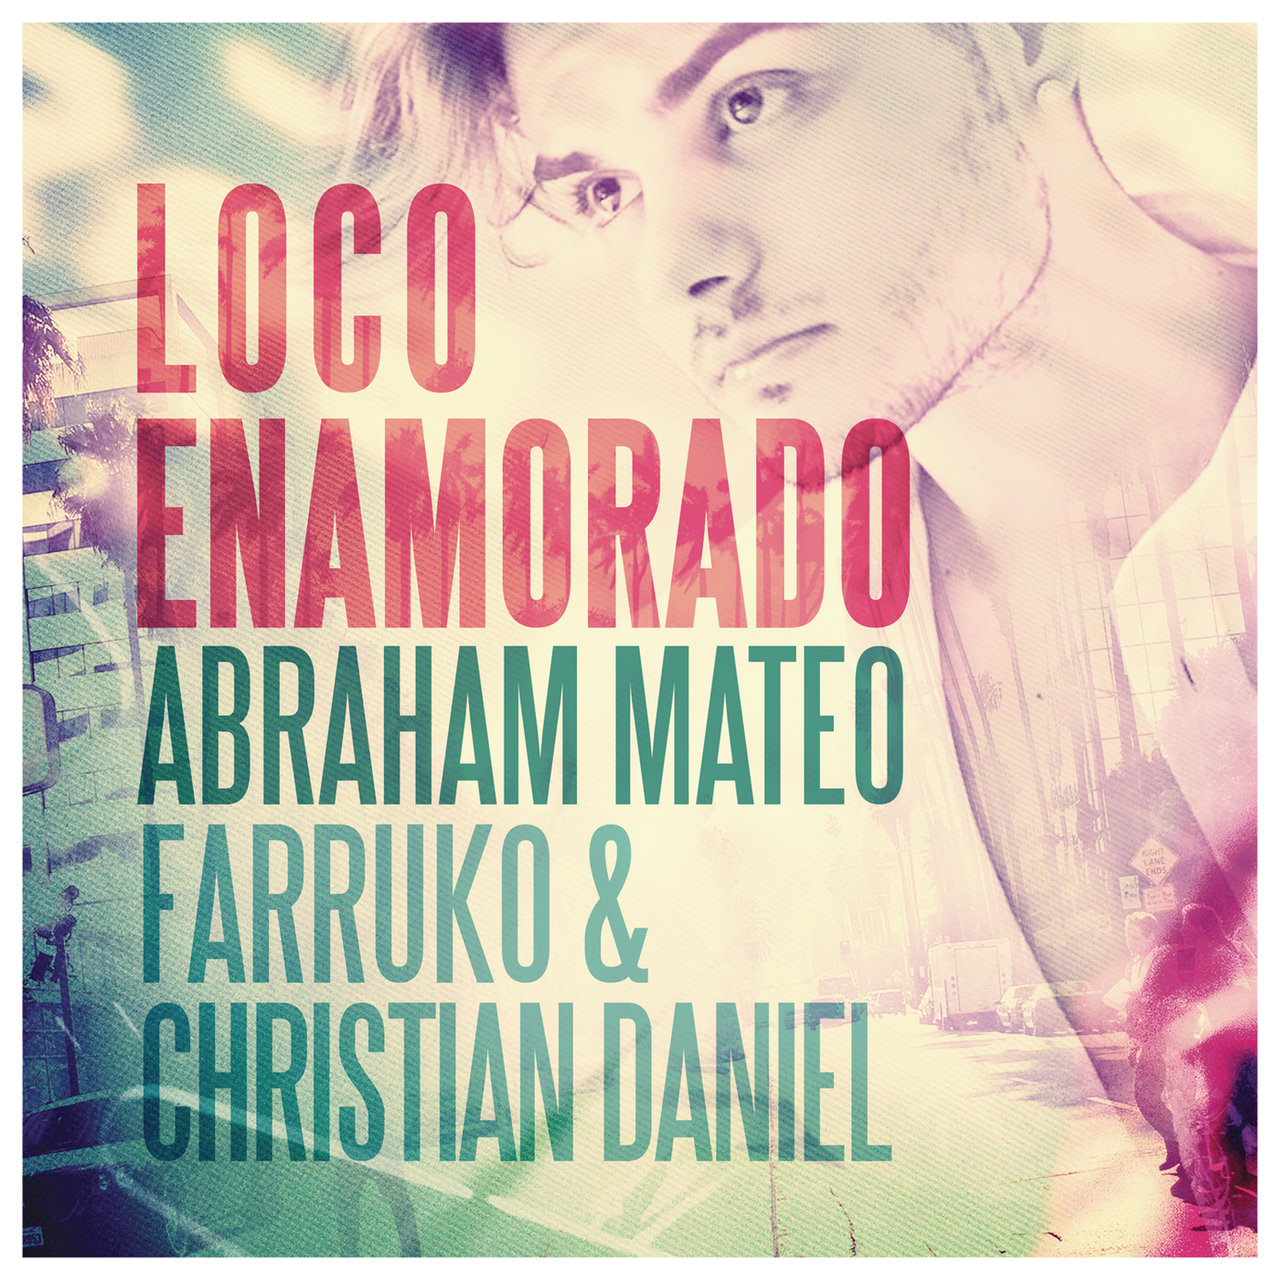 Abraham Mateo, Farruko, & Christian Daniel — Loco Enamorado cover artwork